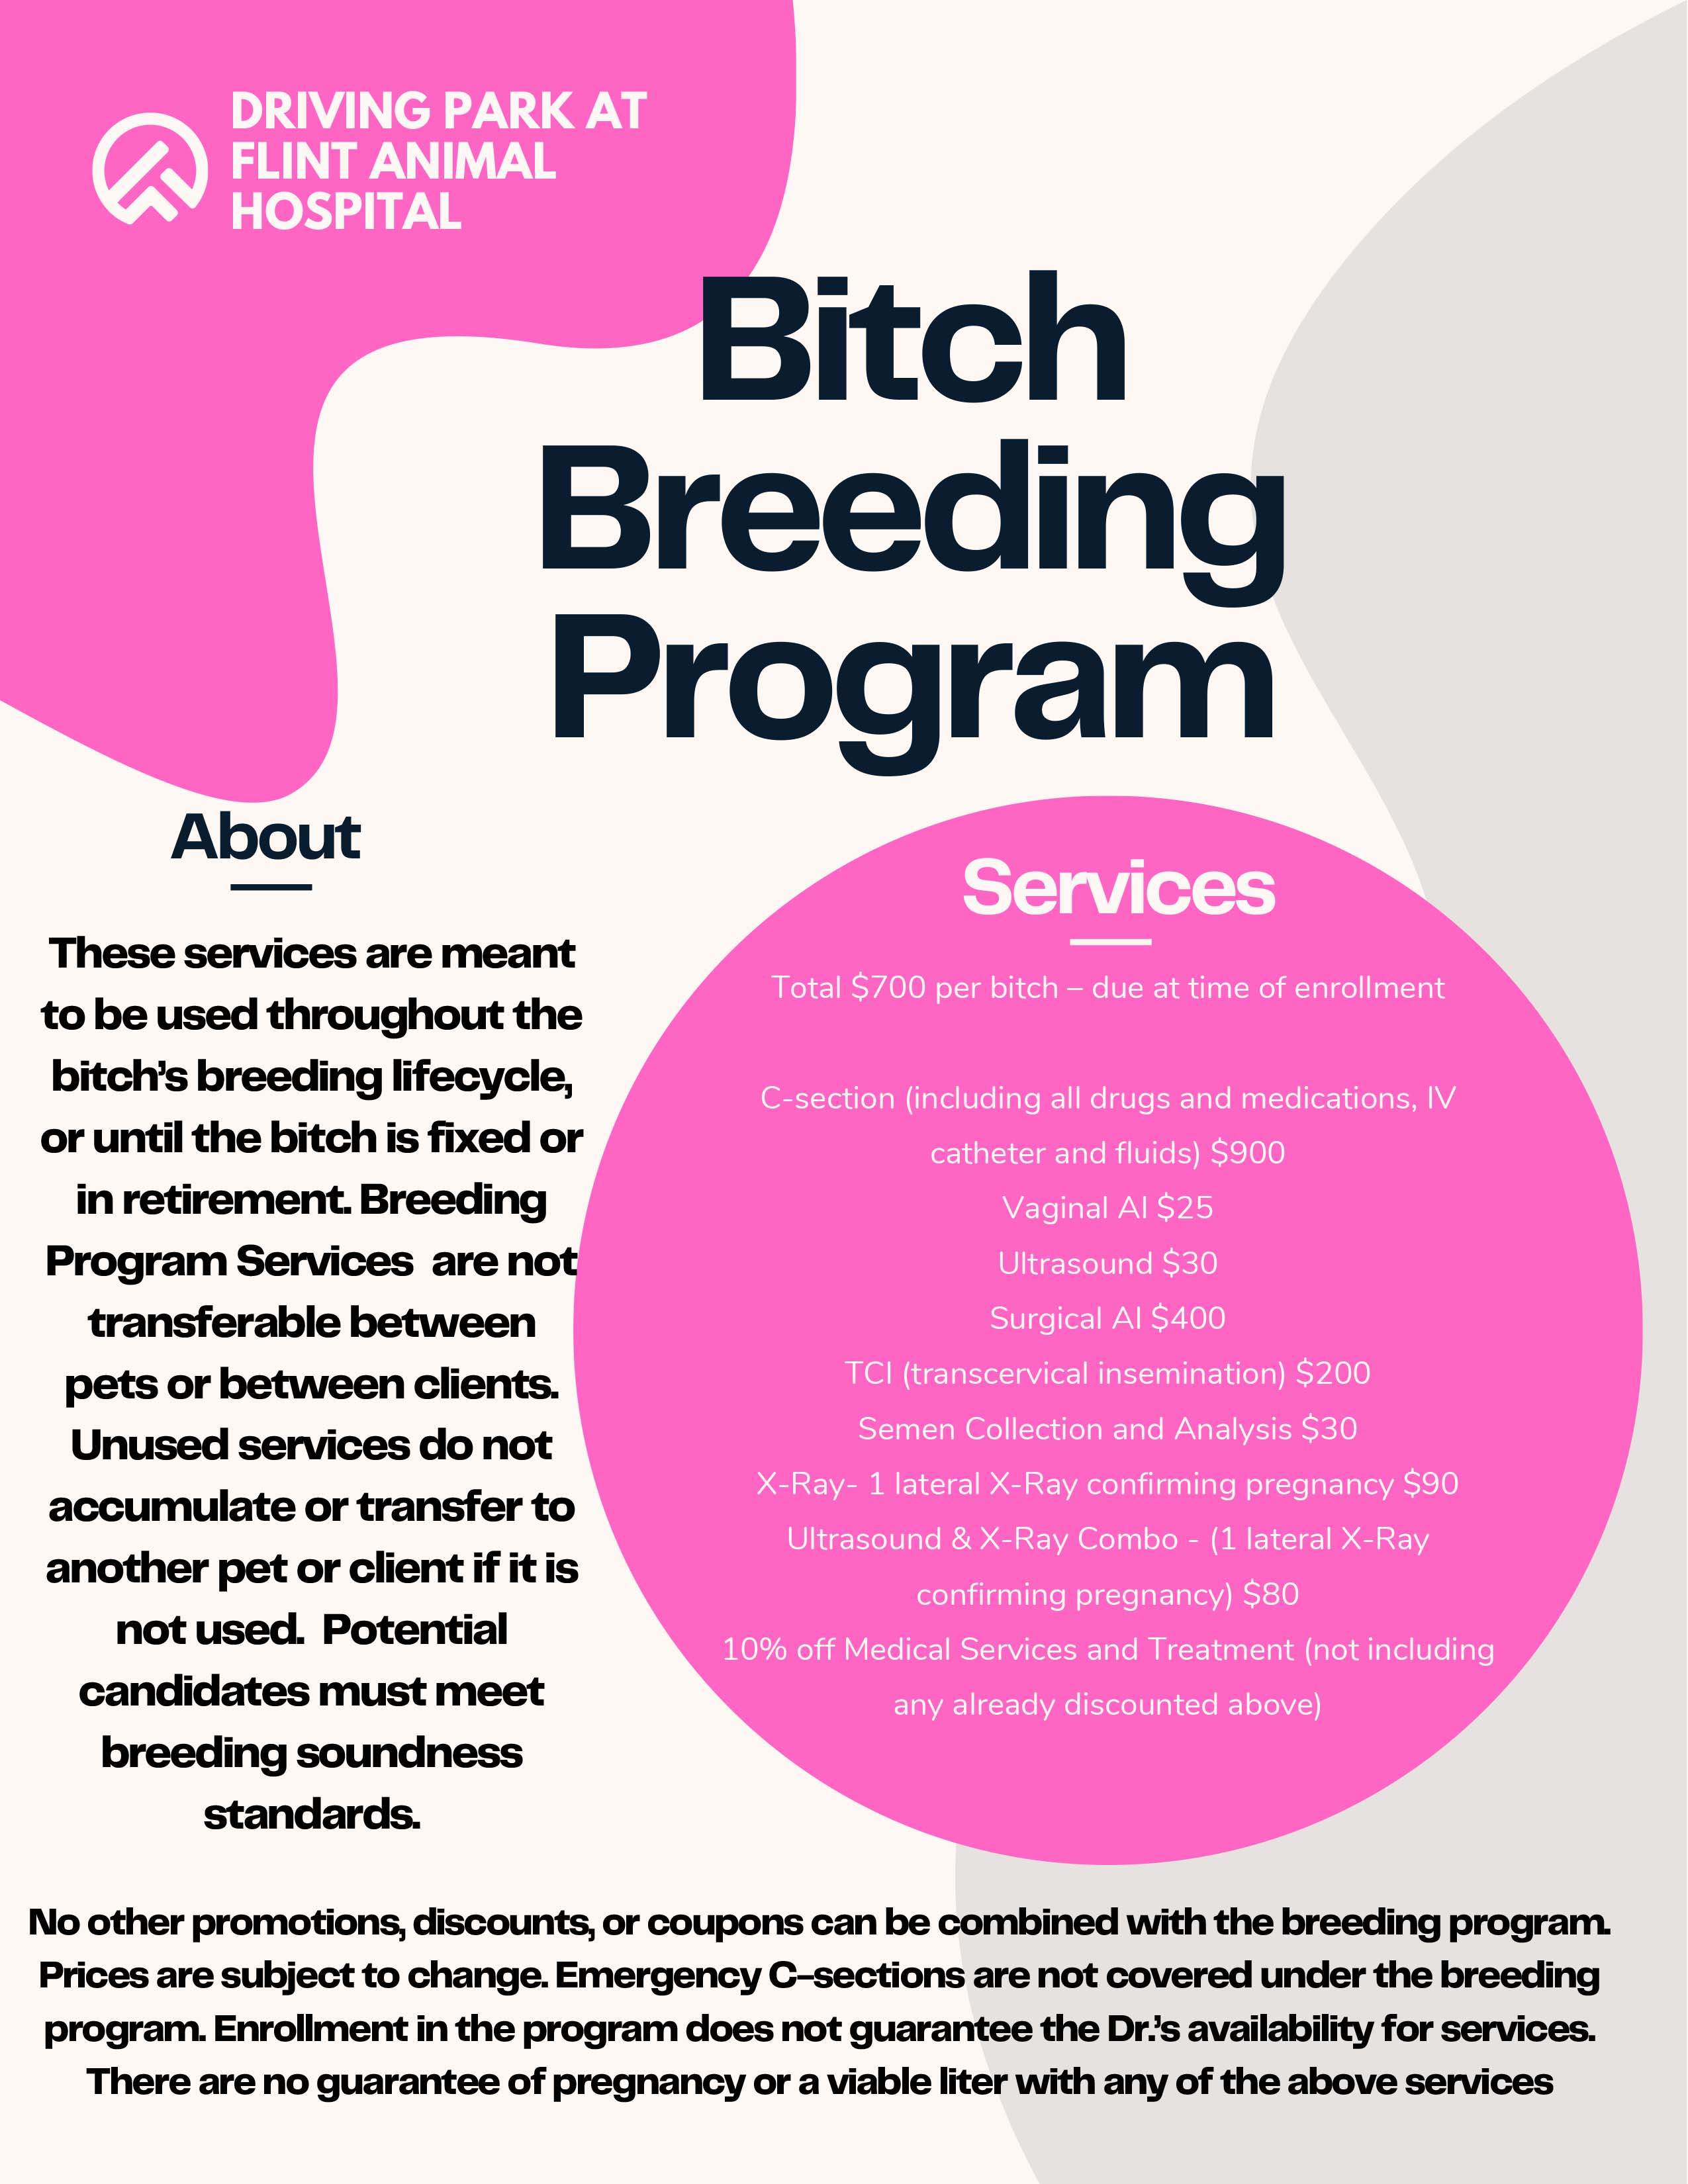 Bitch Breeding Program ad